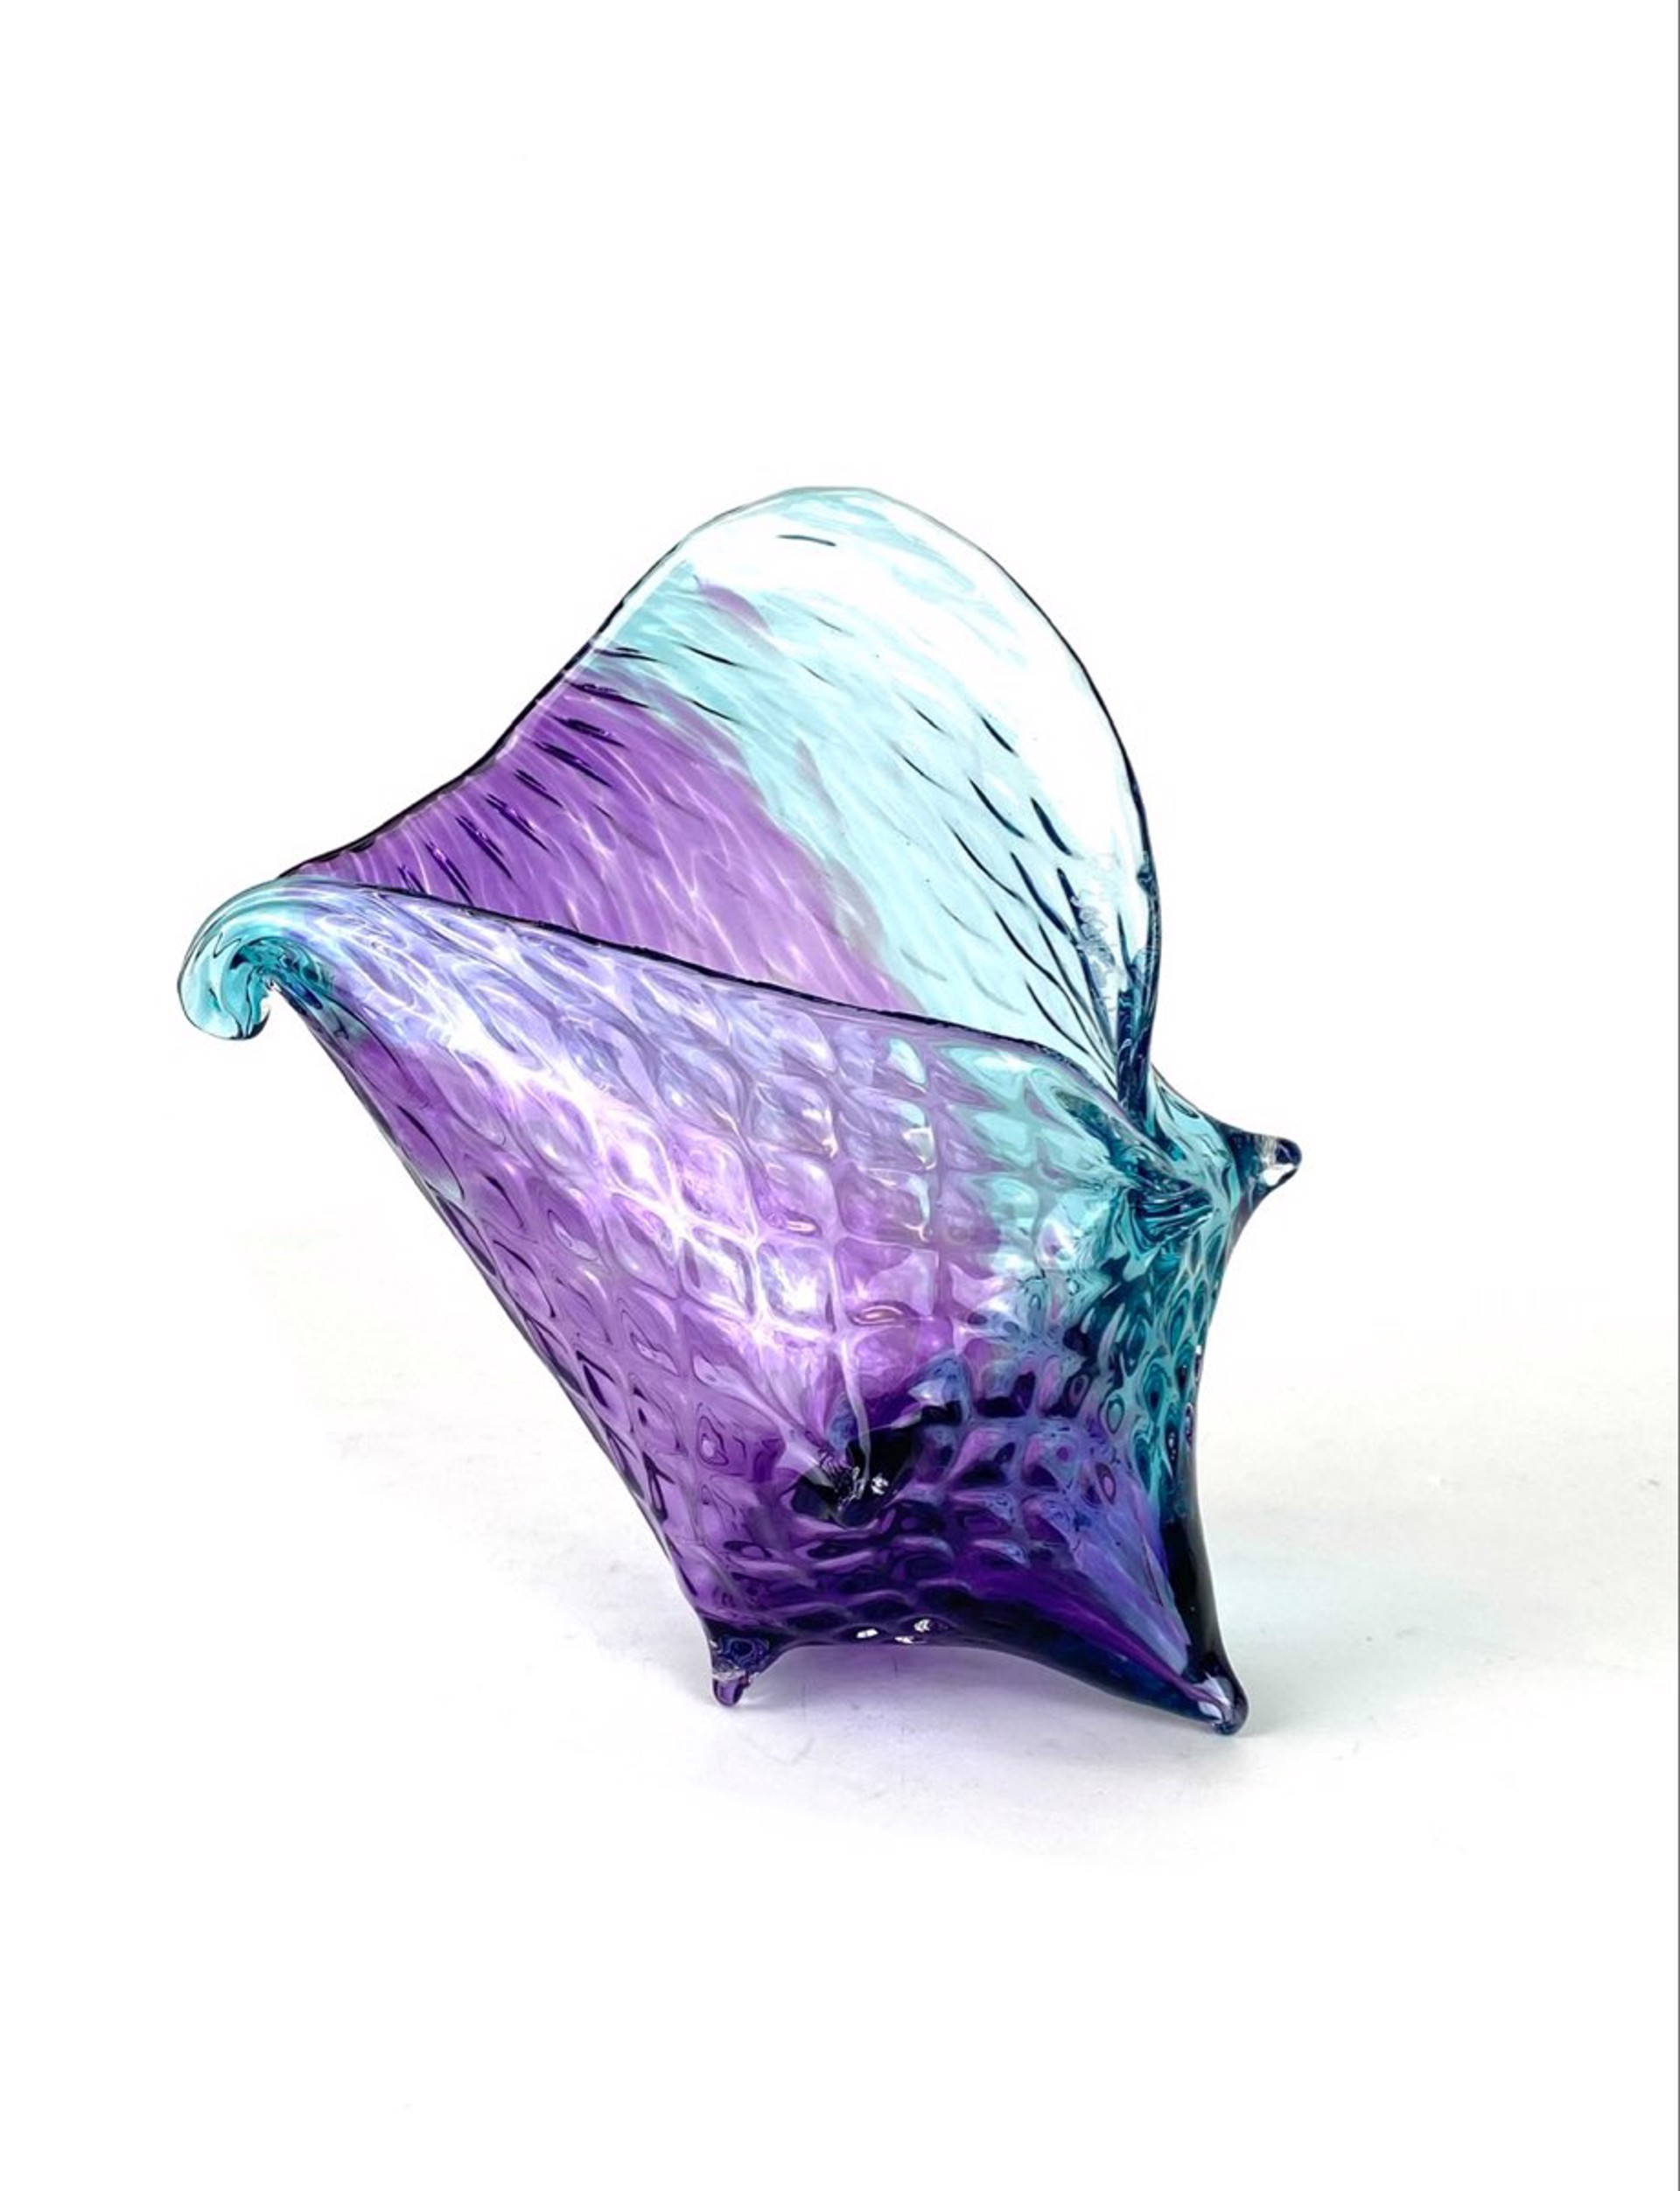 Prism Shell by Joseph Hobbs